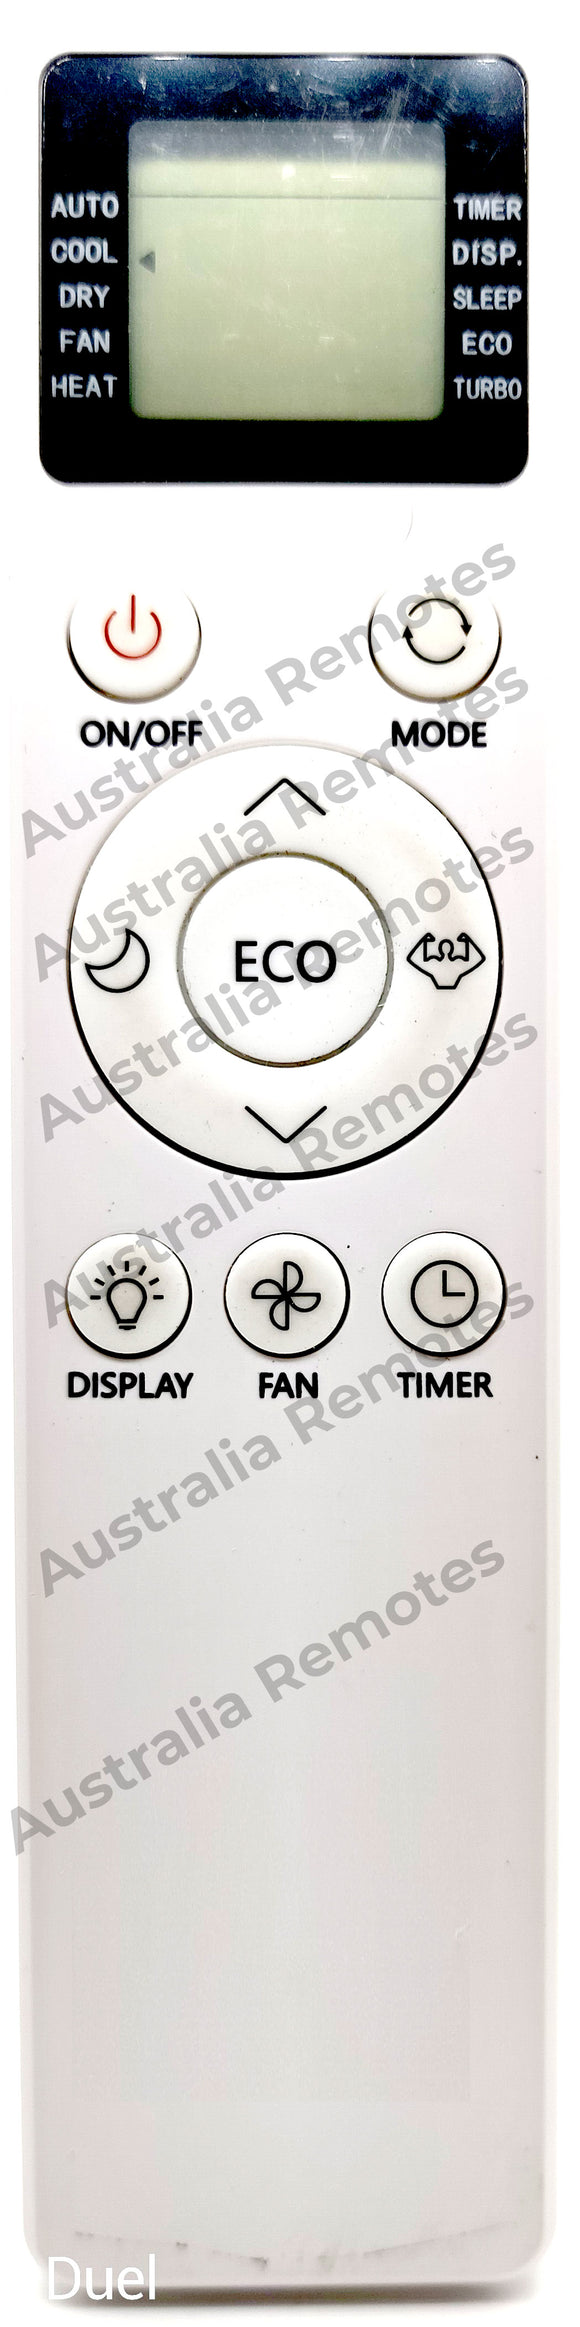 AC Remote For TECO Portable Air Conditioners